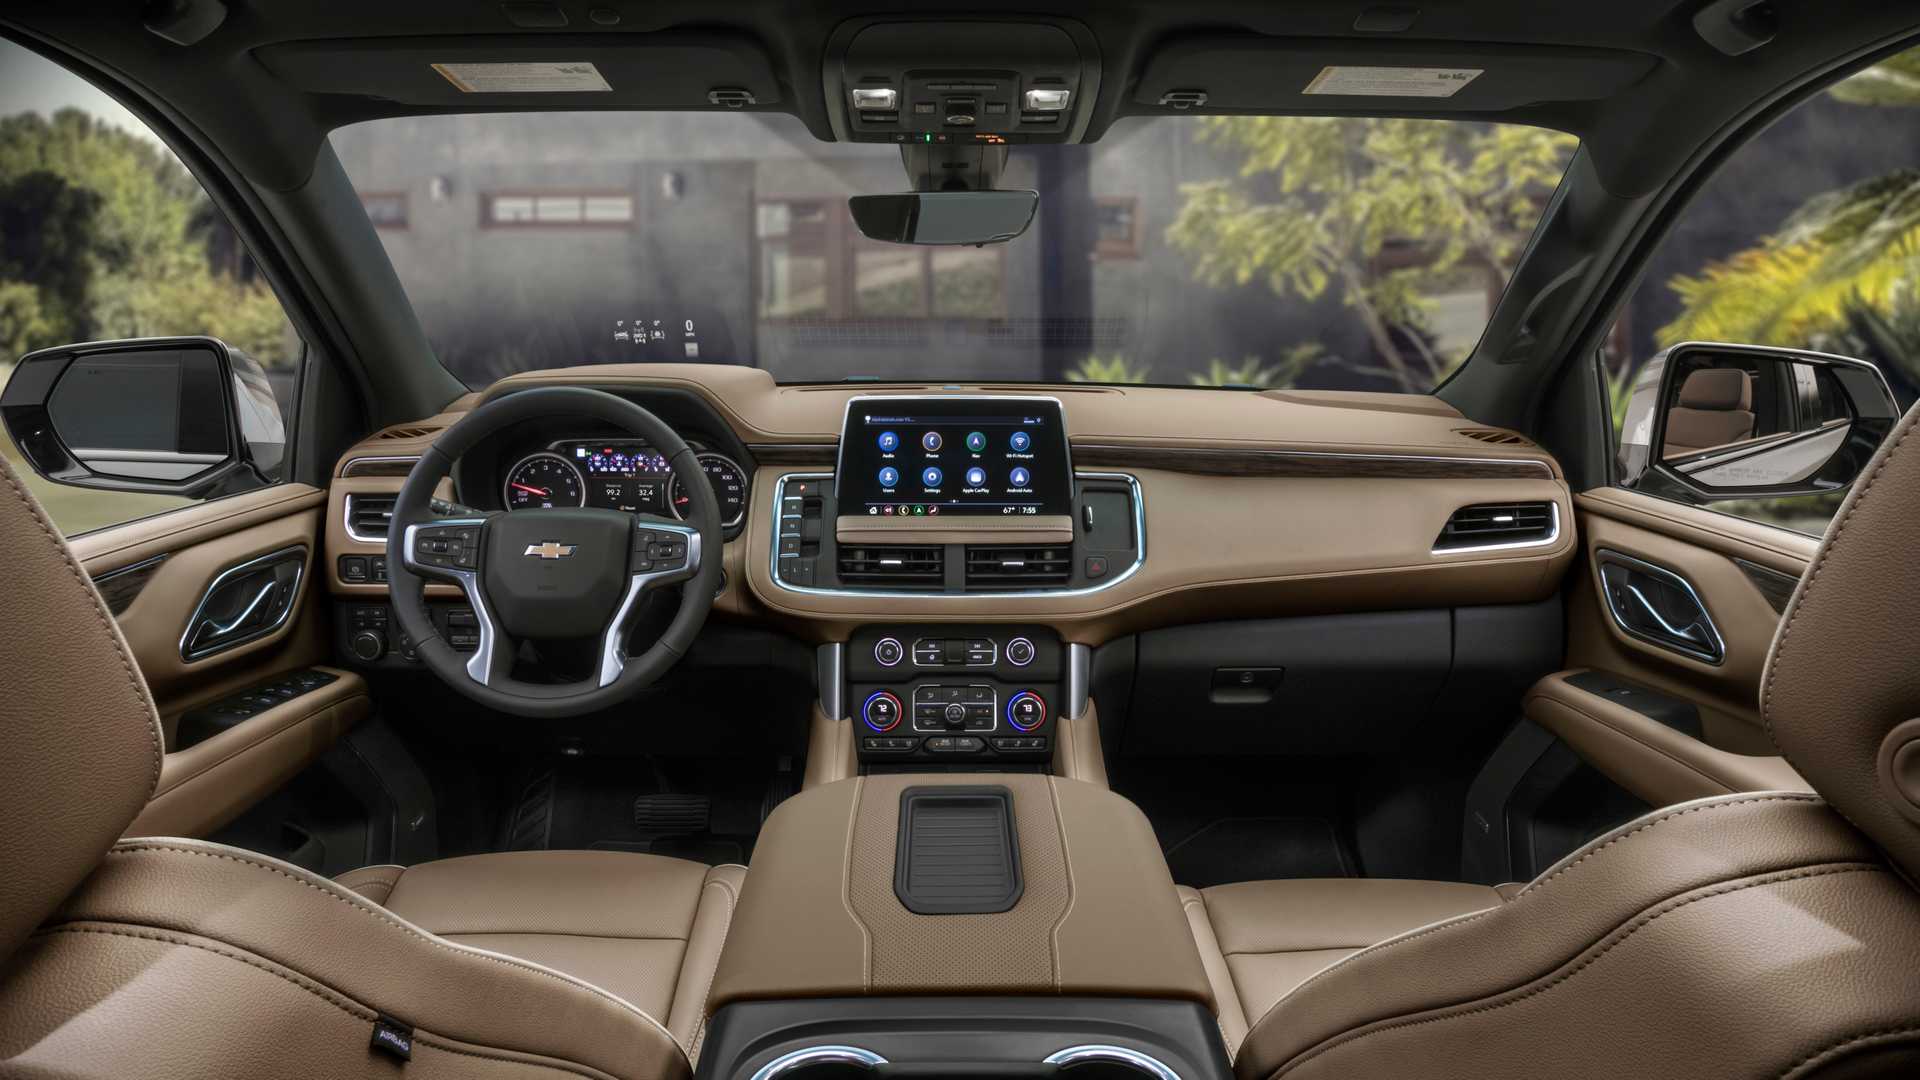 Chevrolet Suburban interior - Cockpit